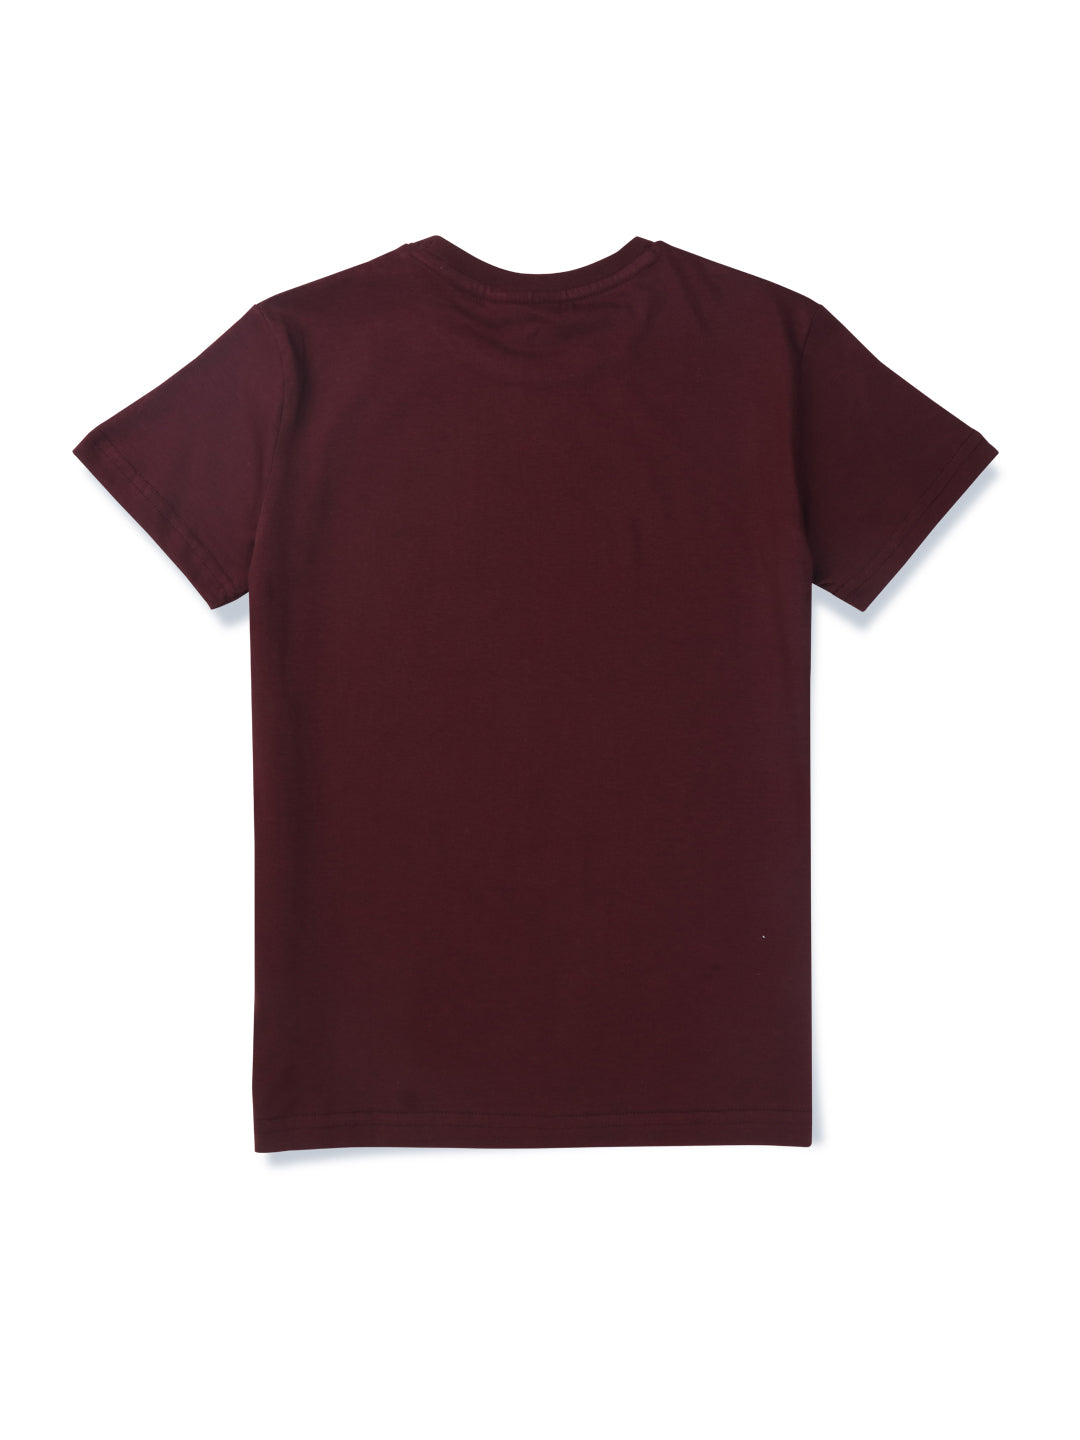 Boys Maroon Printed Cotton T-Shirt